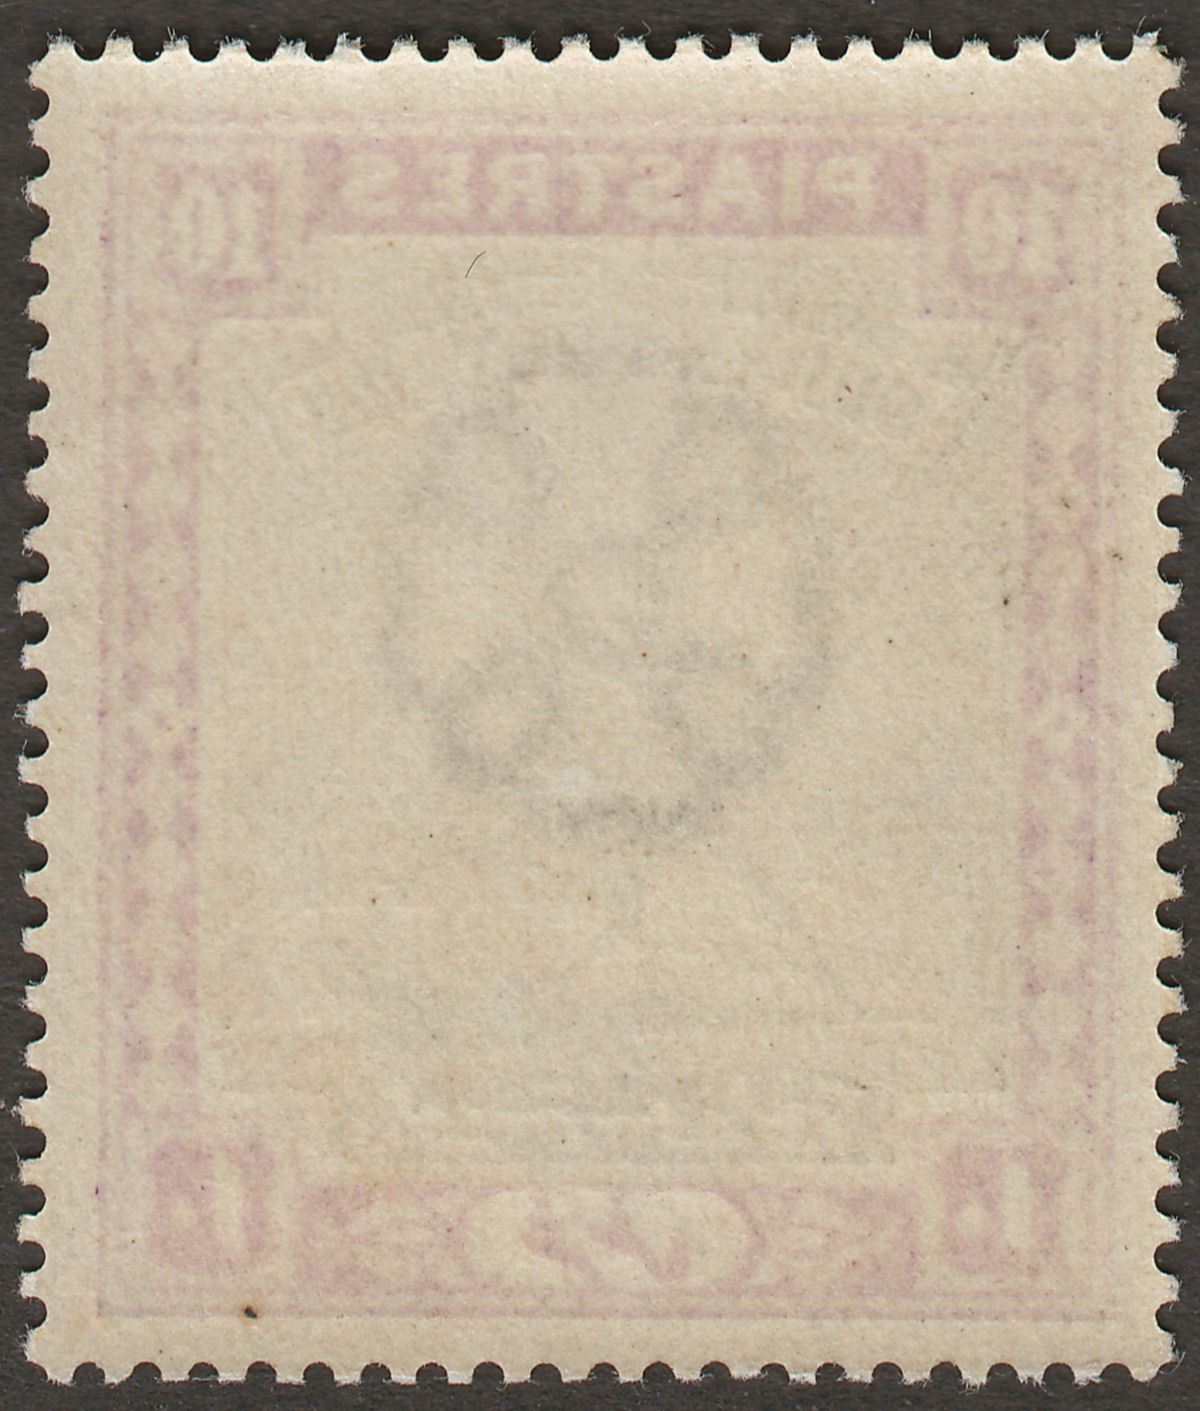 Sudan 1898 QV Camel Postman 10p Black and Mauve Mint SG17 cat £42